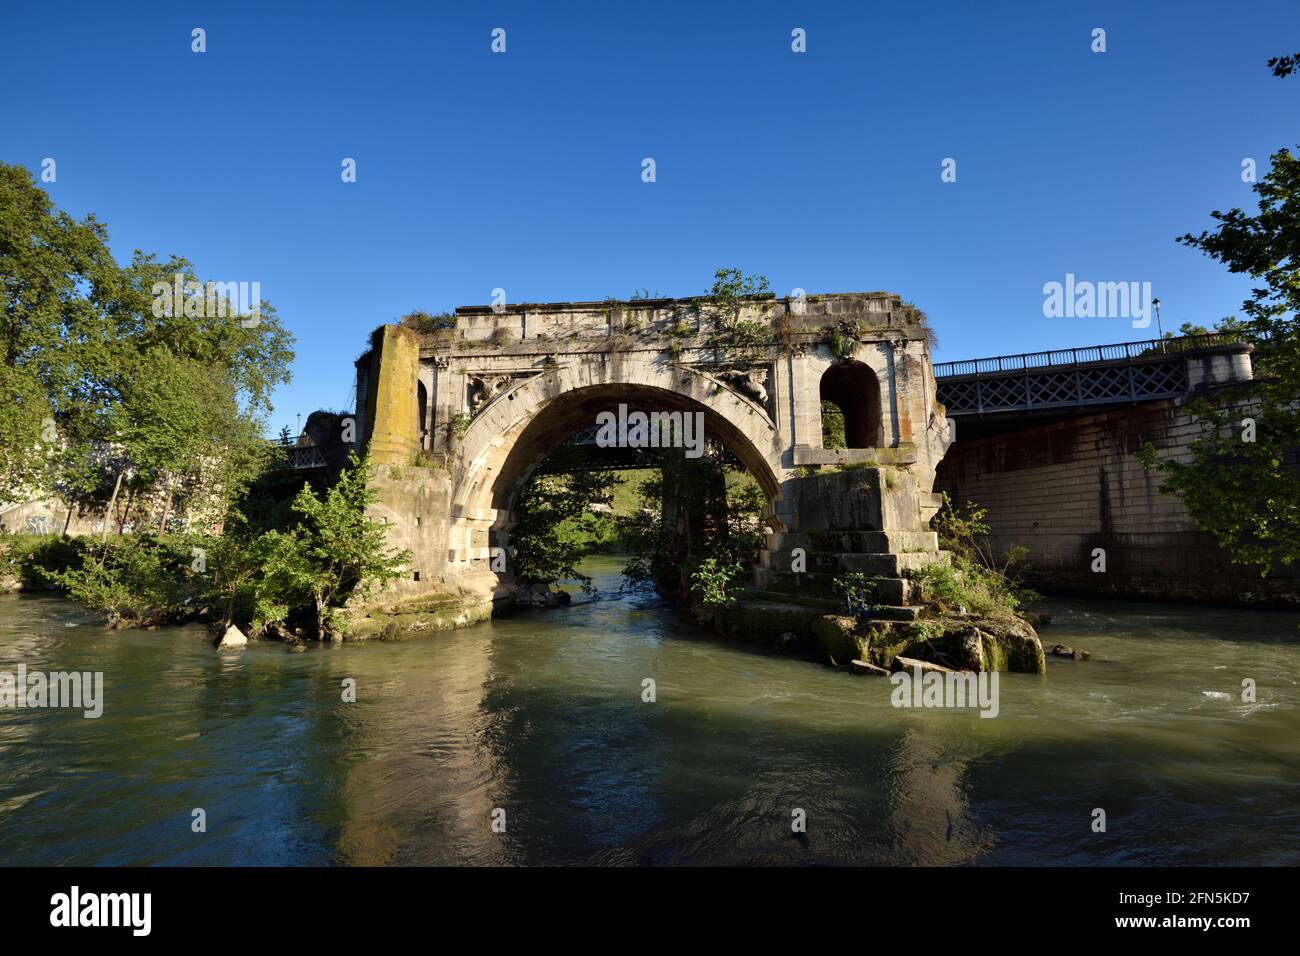 Italia, Roma, fiume Tevere, Ponte rotto (ponte rotto), pons aemilius, antico ponte romano Foto Stock